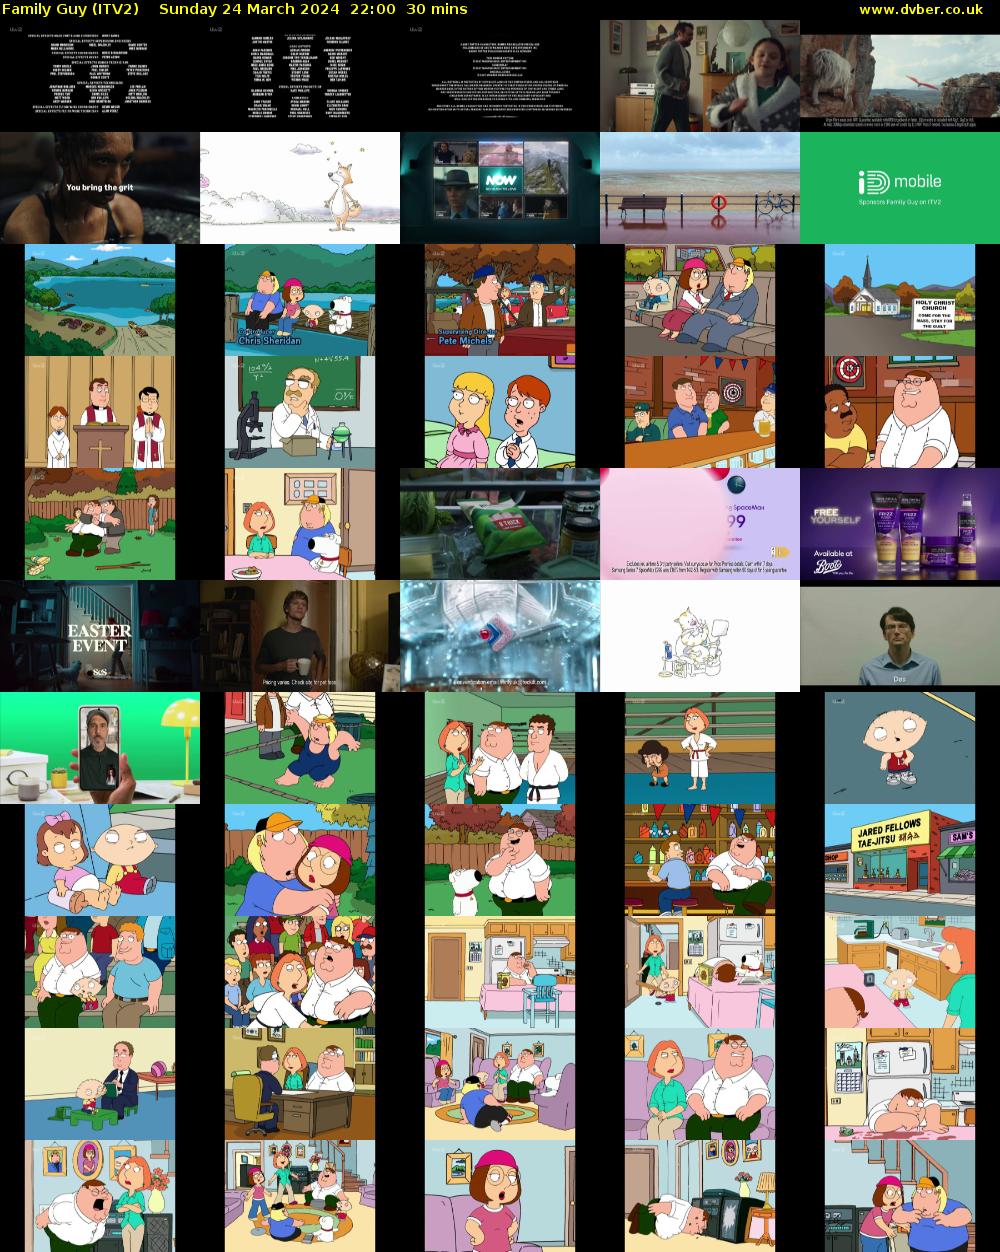 Family Guy (ITV2) Sunday 24 March 2024 22:00 - 22:30